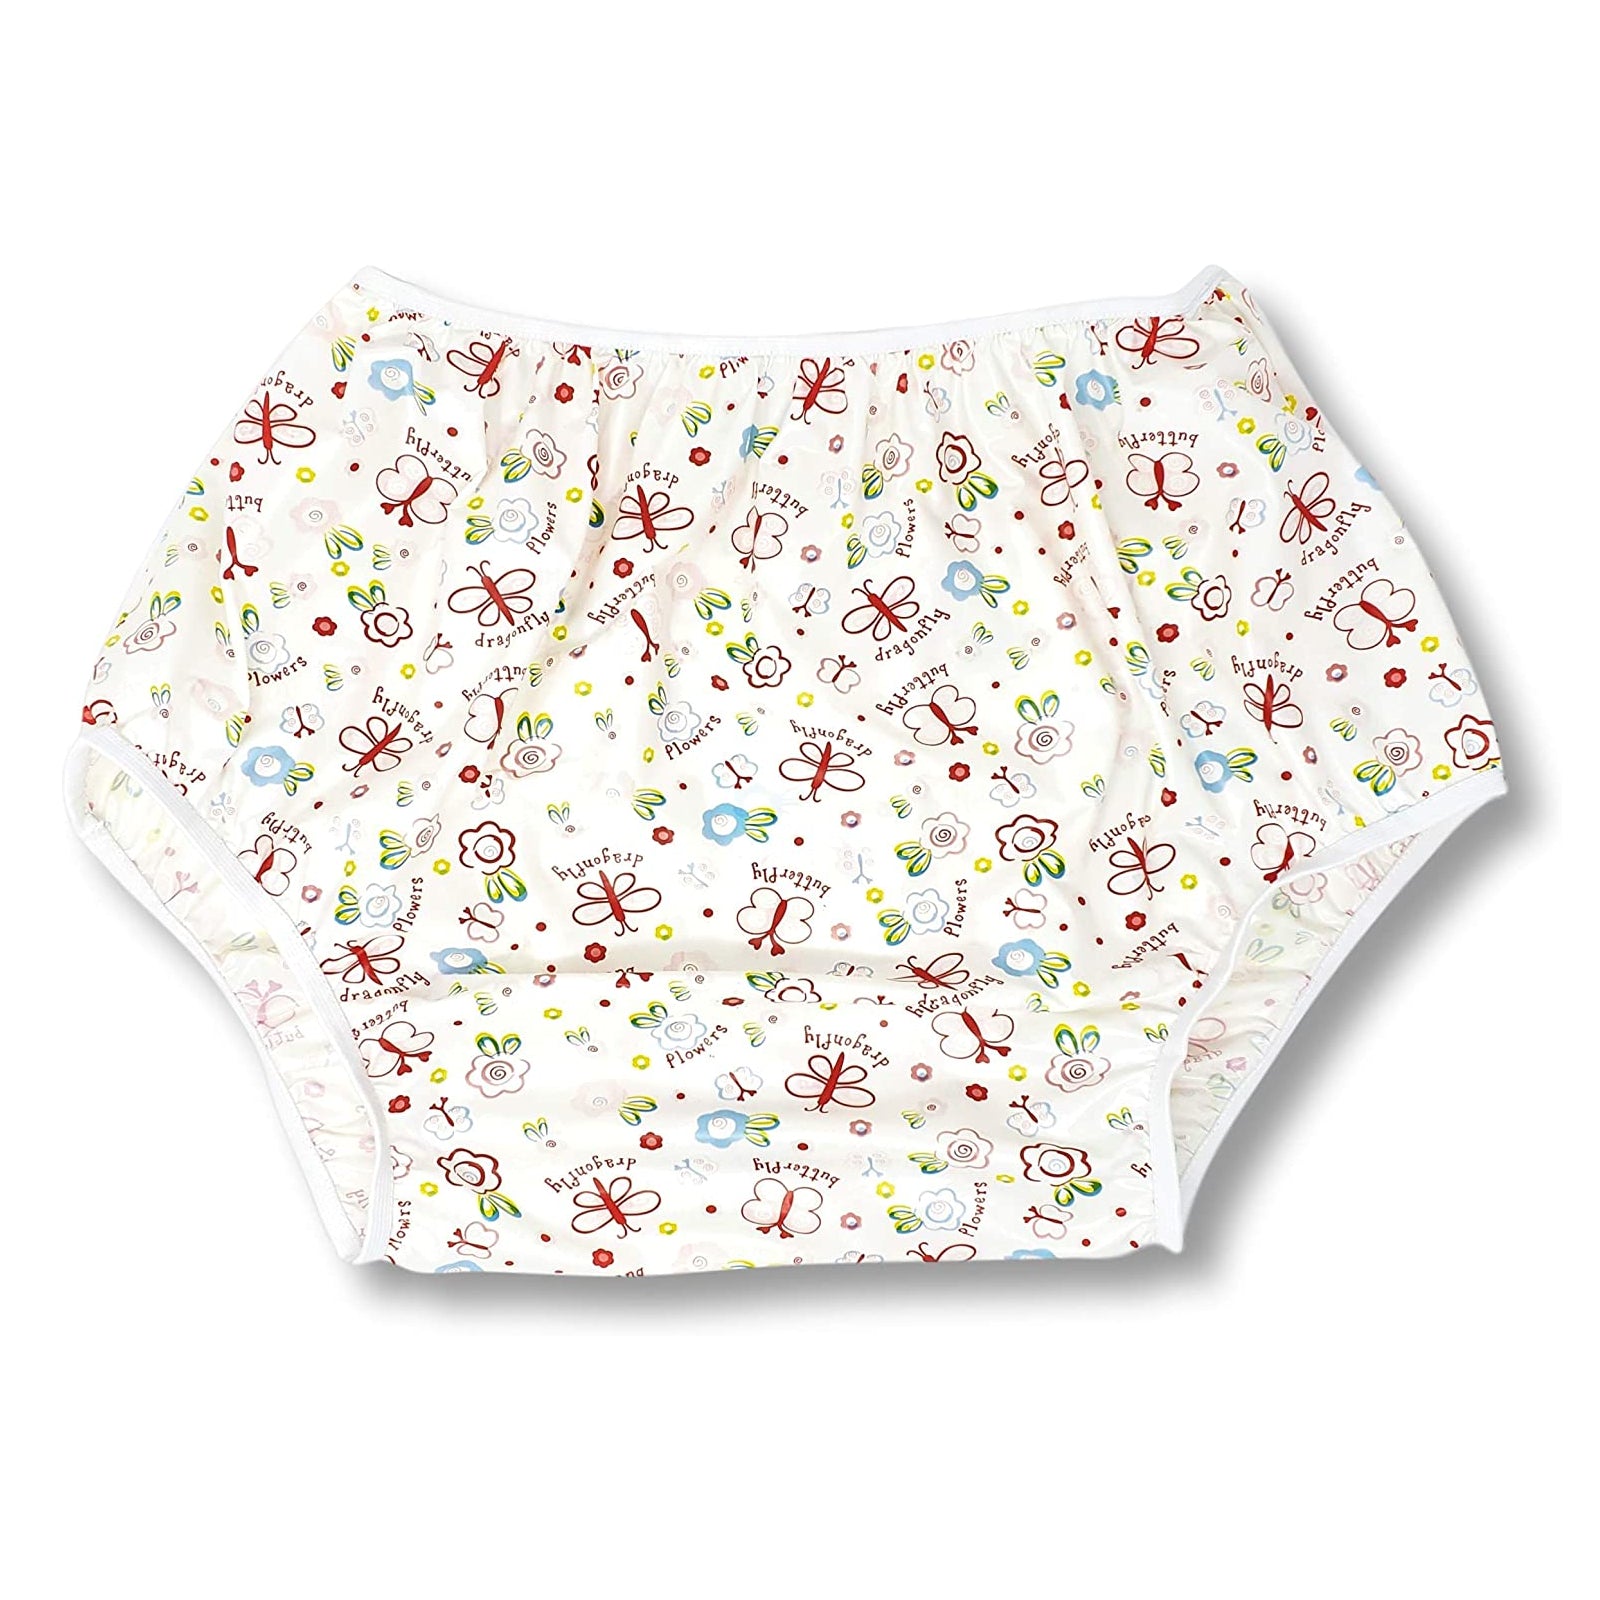 Rearz - White Butterfly Plastic Pants (2-Pack)